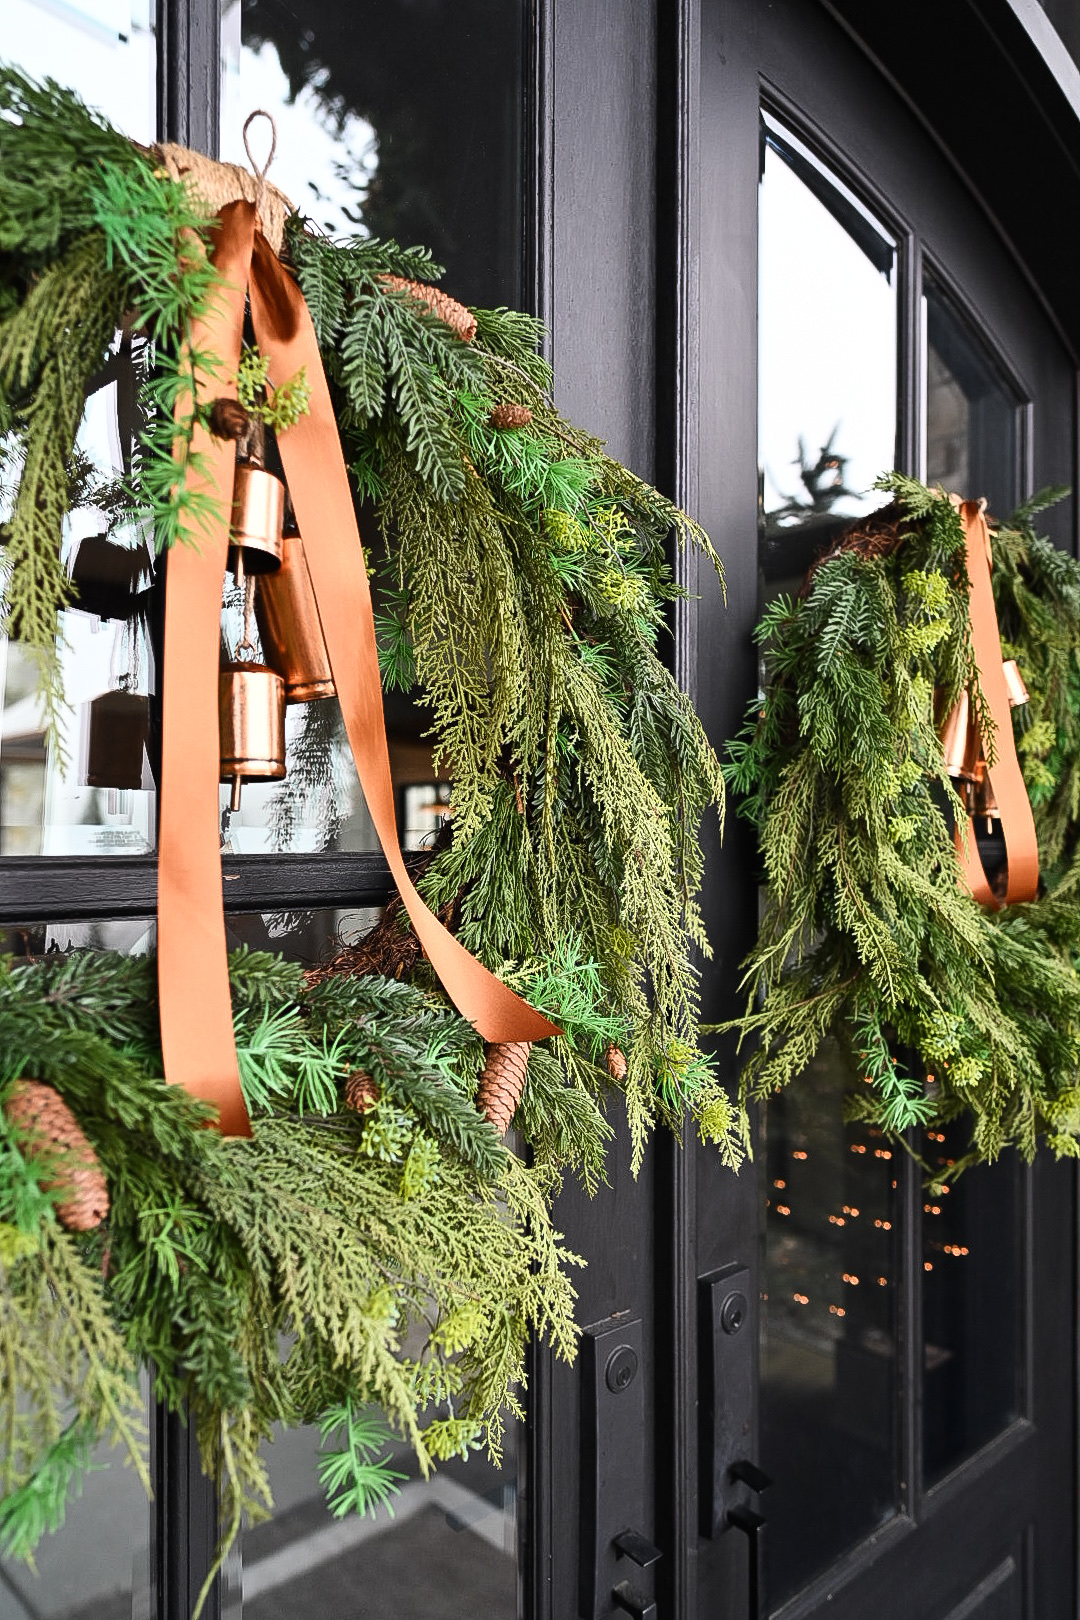 holiday home edit | my front porch | #holiday #holidayhome #holidayhomeedit #frontporch #christmas #christmasdecor #christmasdecorideas #christmaswreath #wreath #ribbon #bells #jinglebells #frontdoor